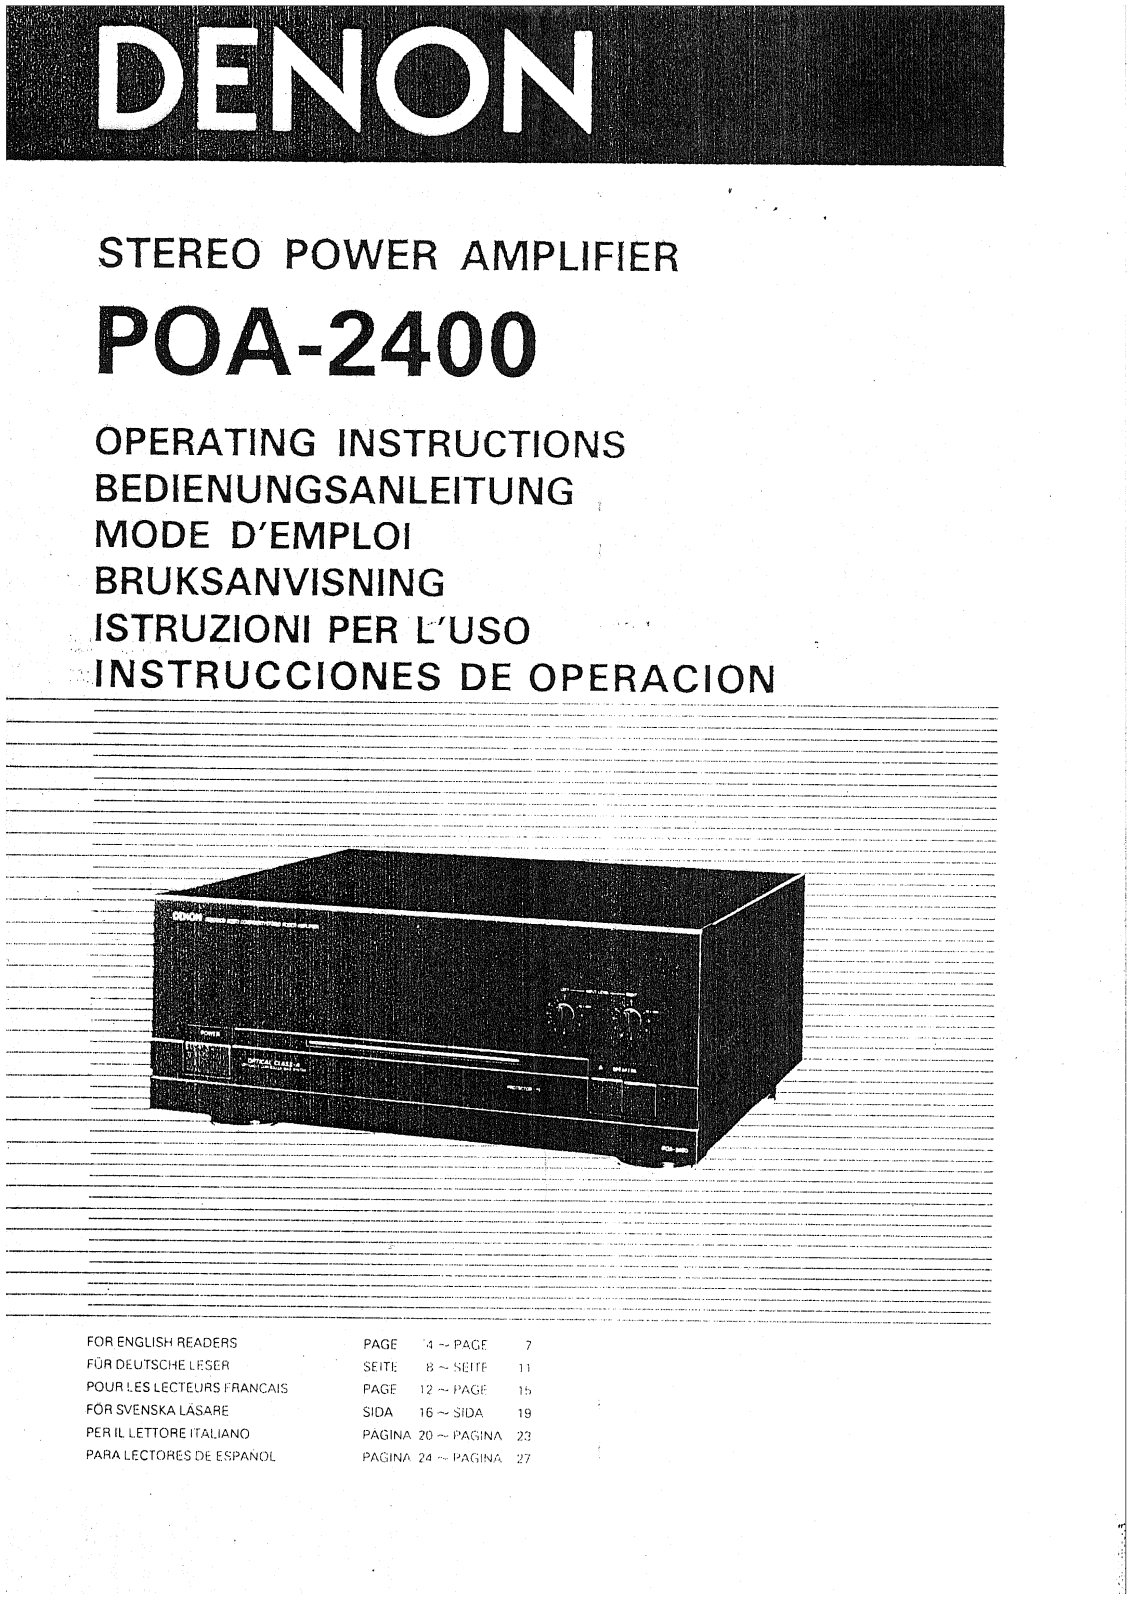 Denon POA-2400 Owner's Manual